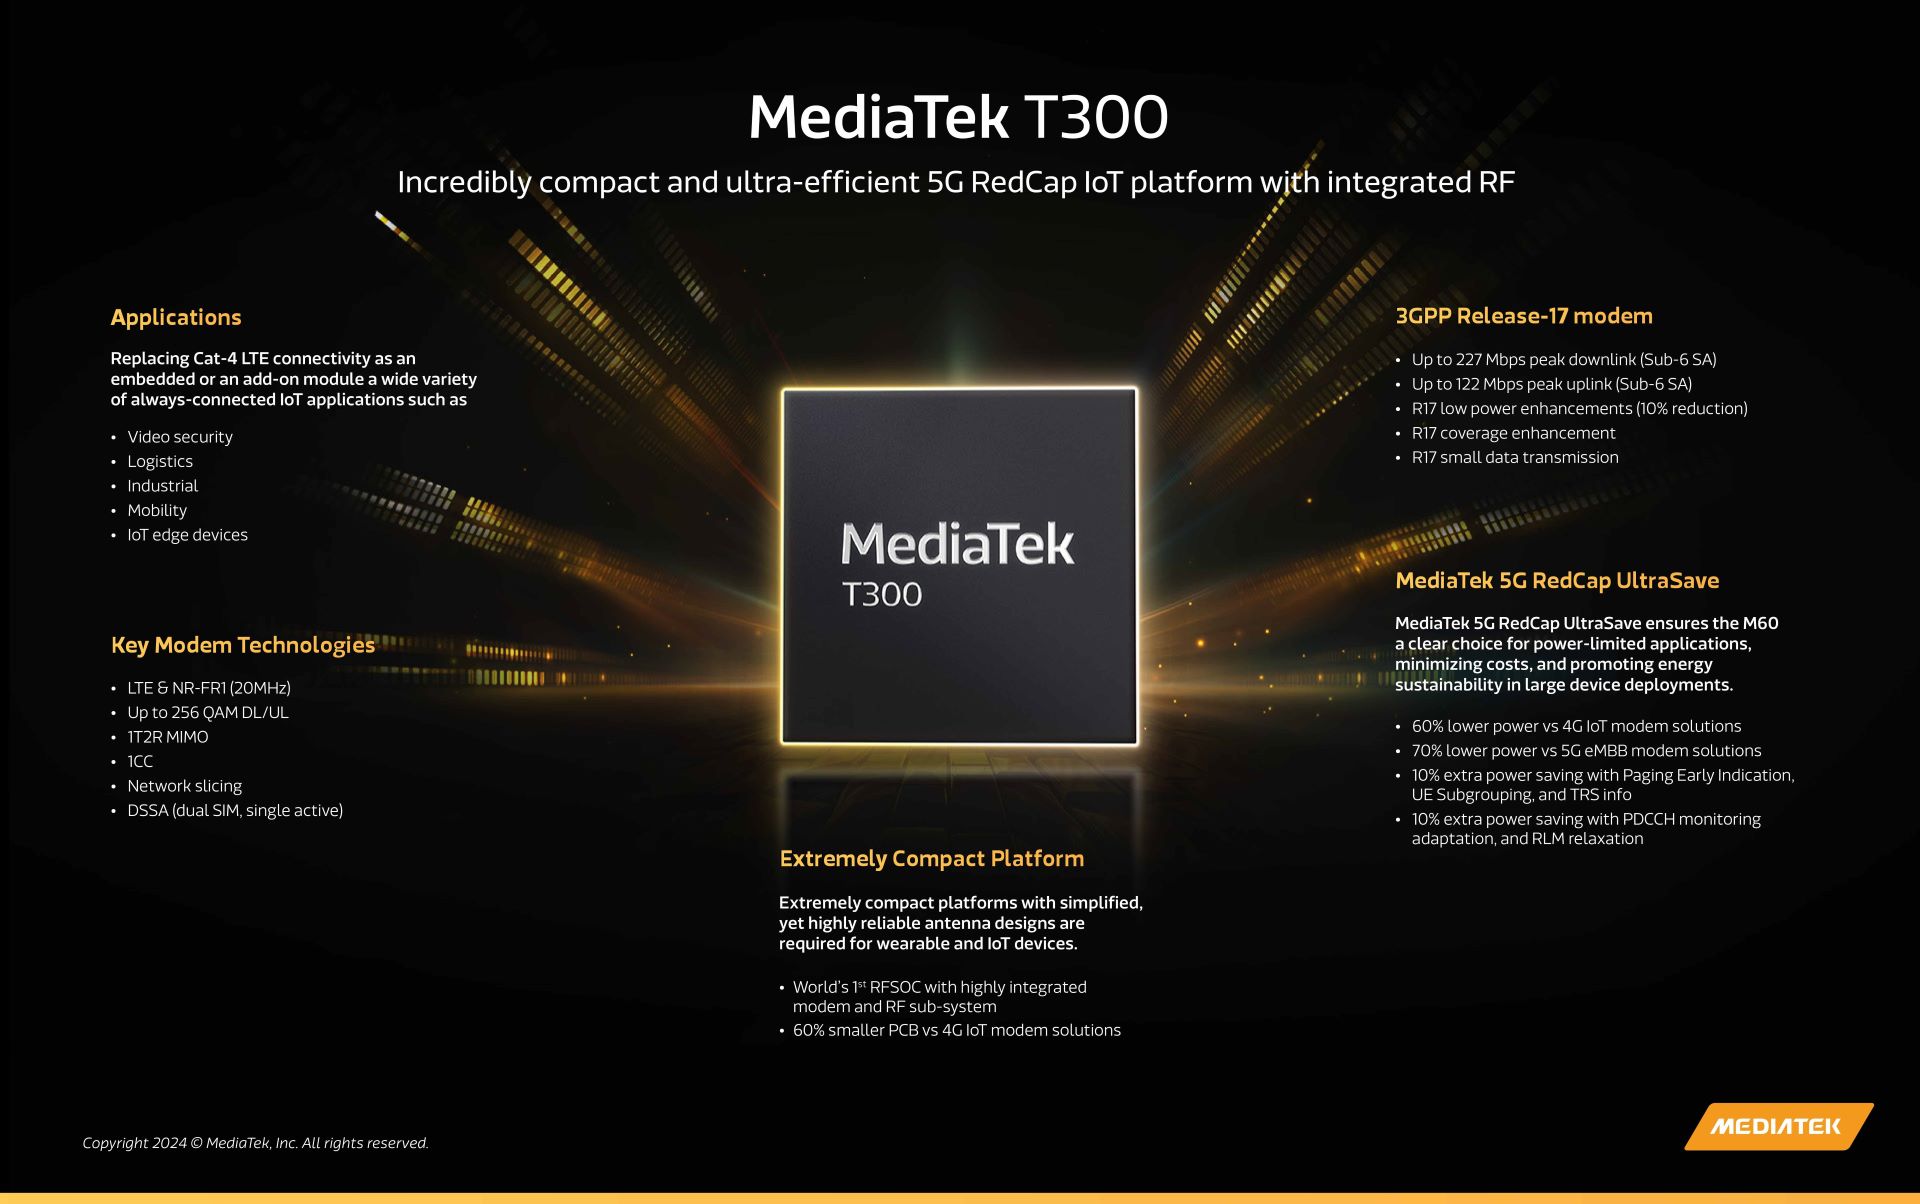 MediaTek Introduces T300 5G RedCap Platform for IoT Devices